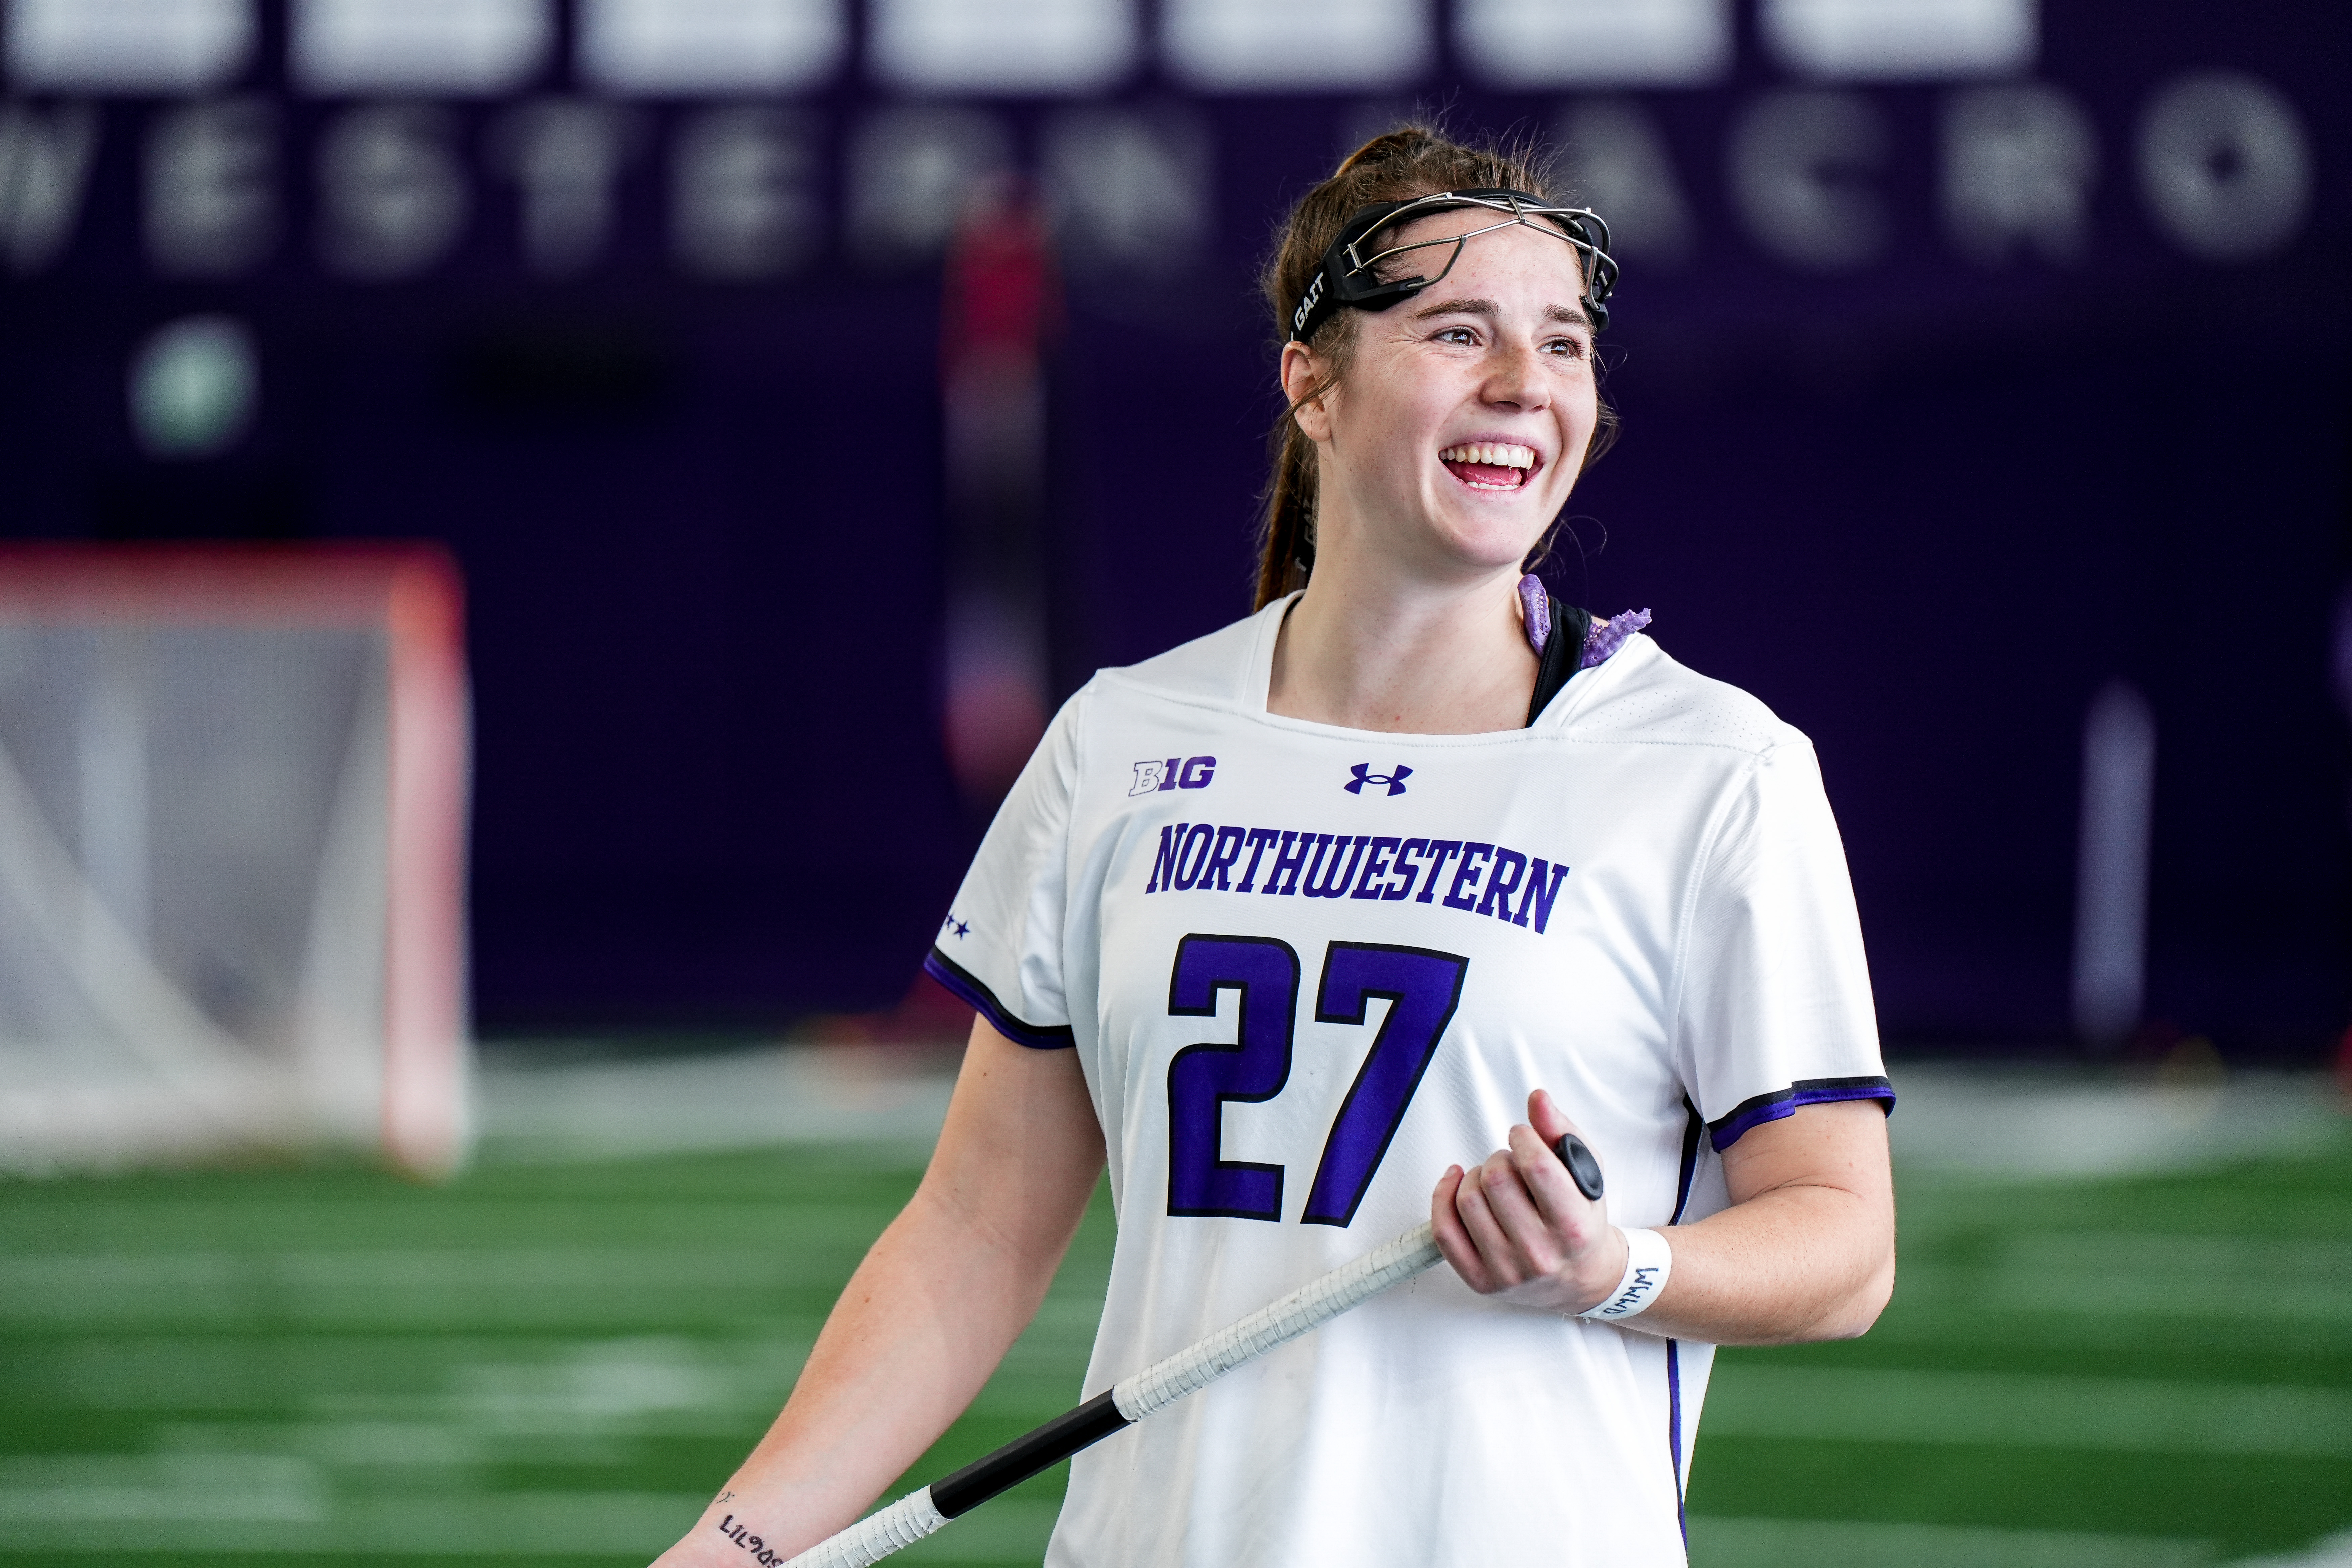 Northwestern lacrosse star Izzy Scane has 64 goals through 15 games of her final season.